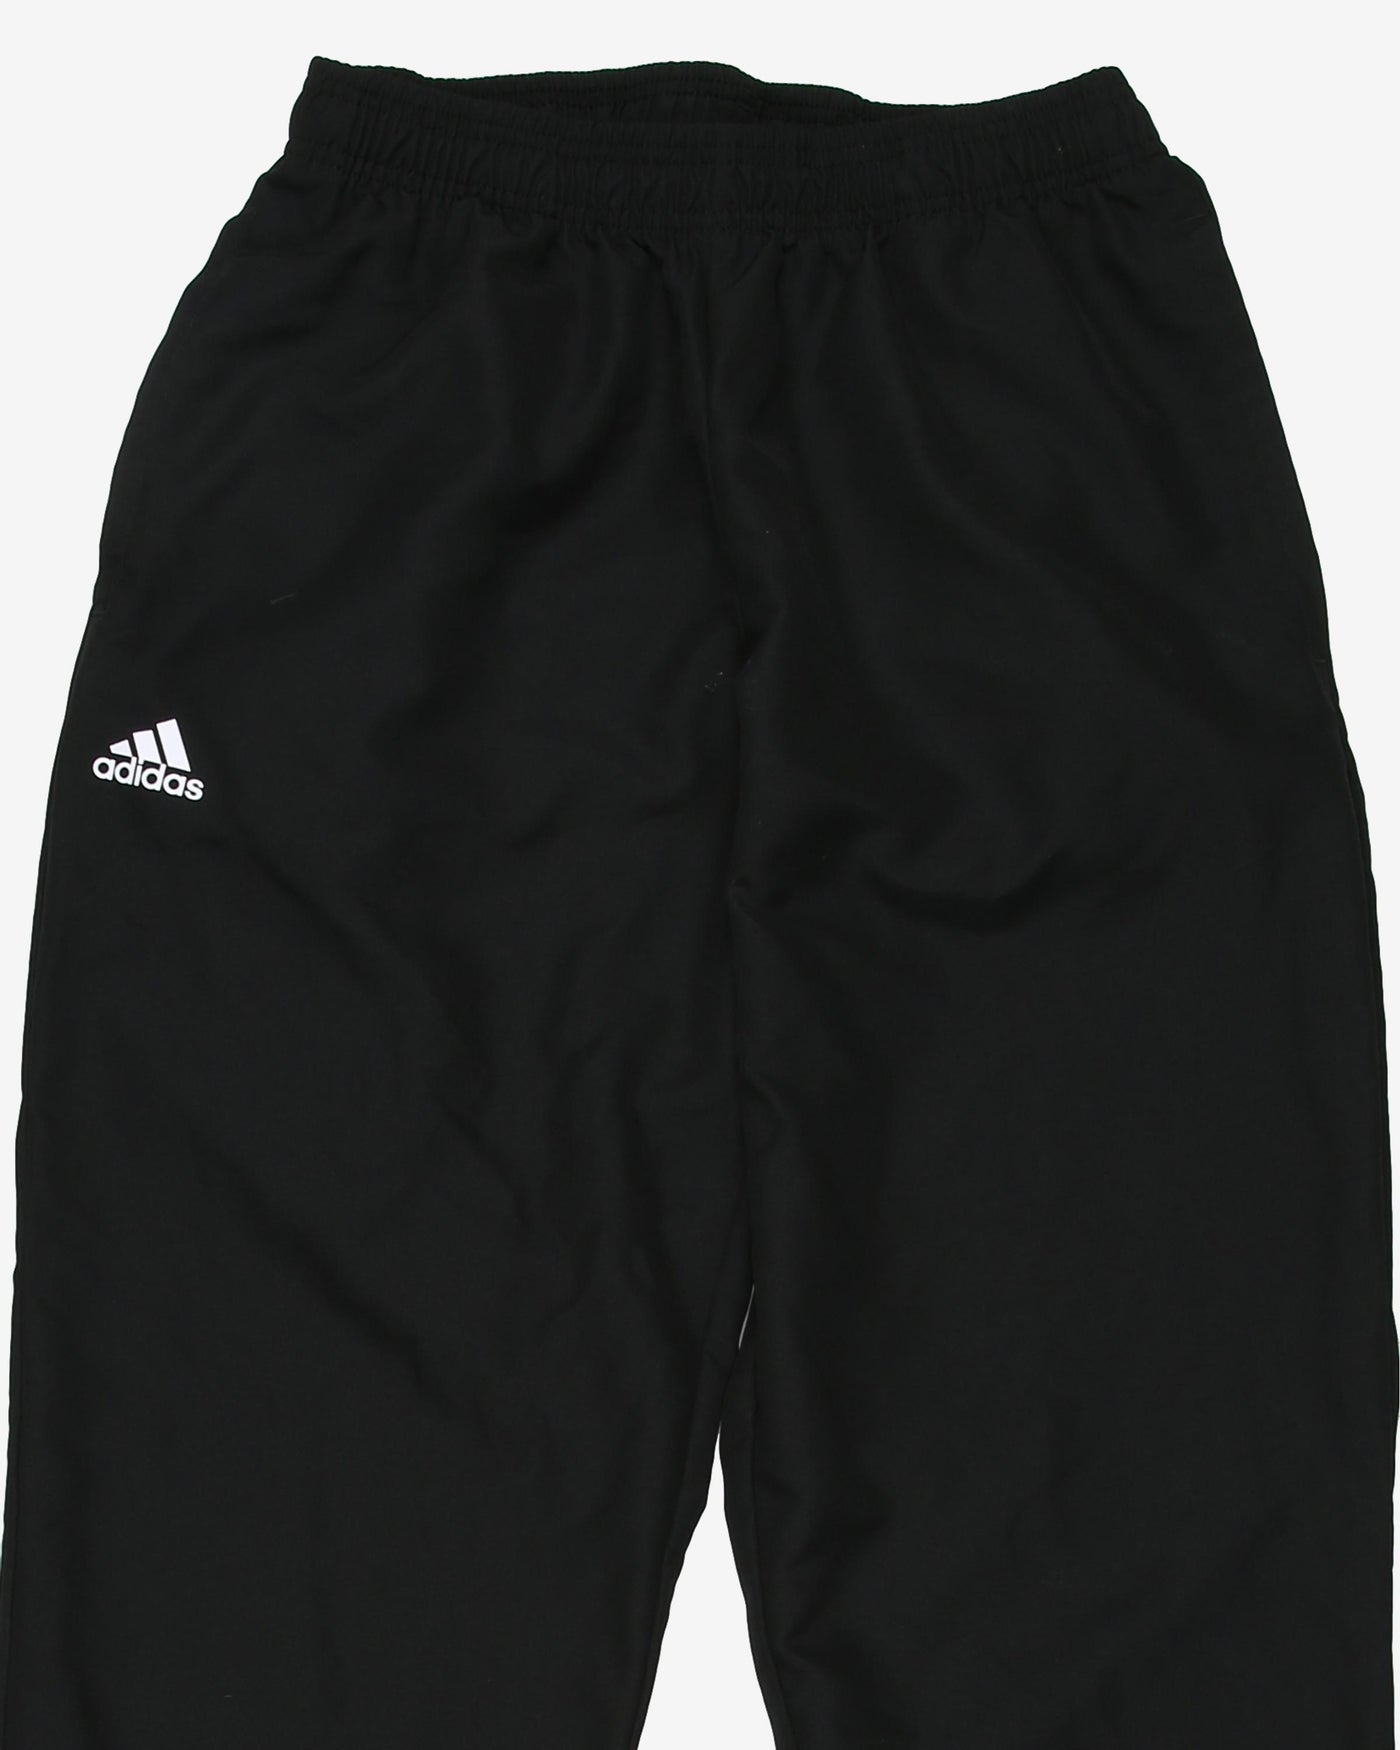 adidas black track trousers - w26